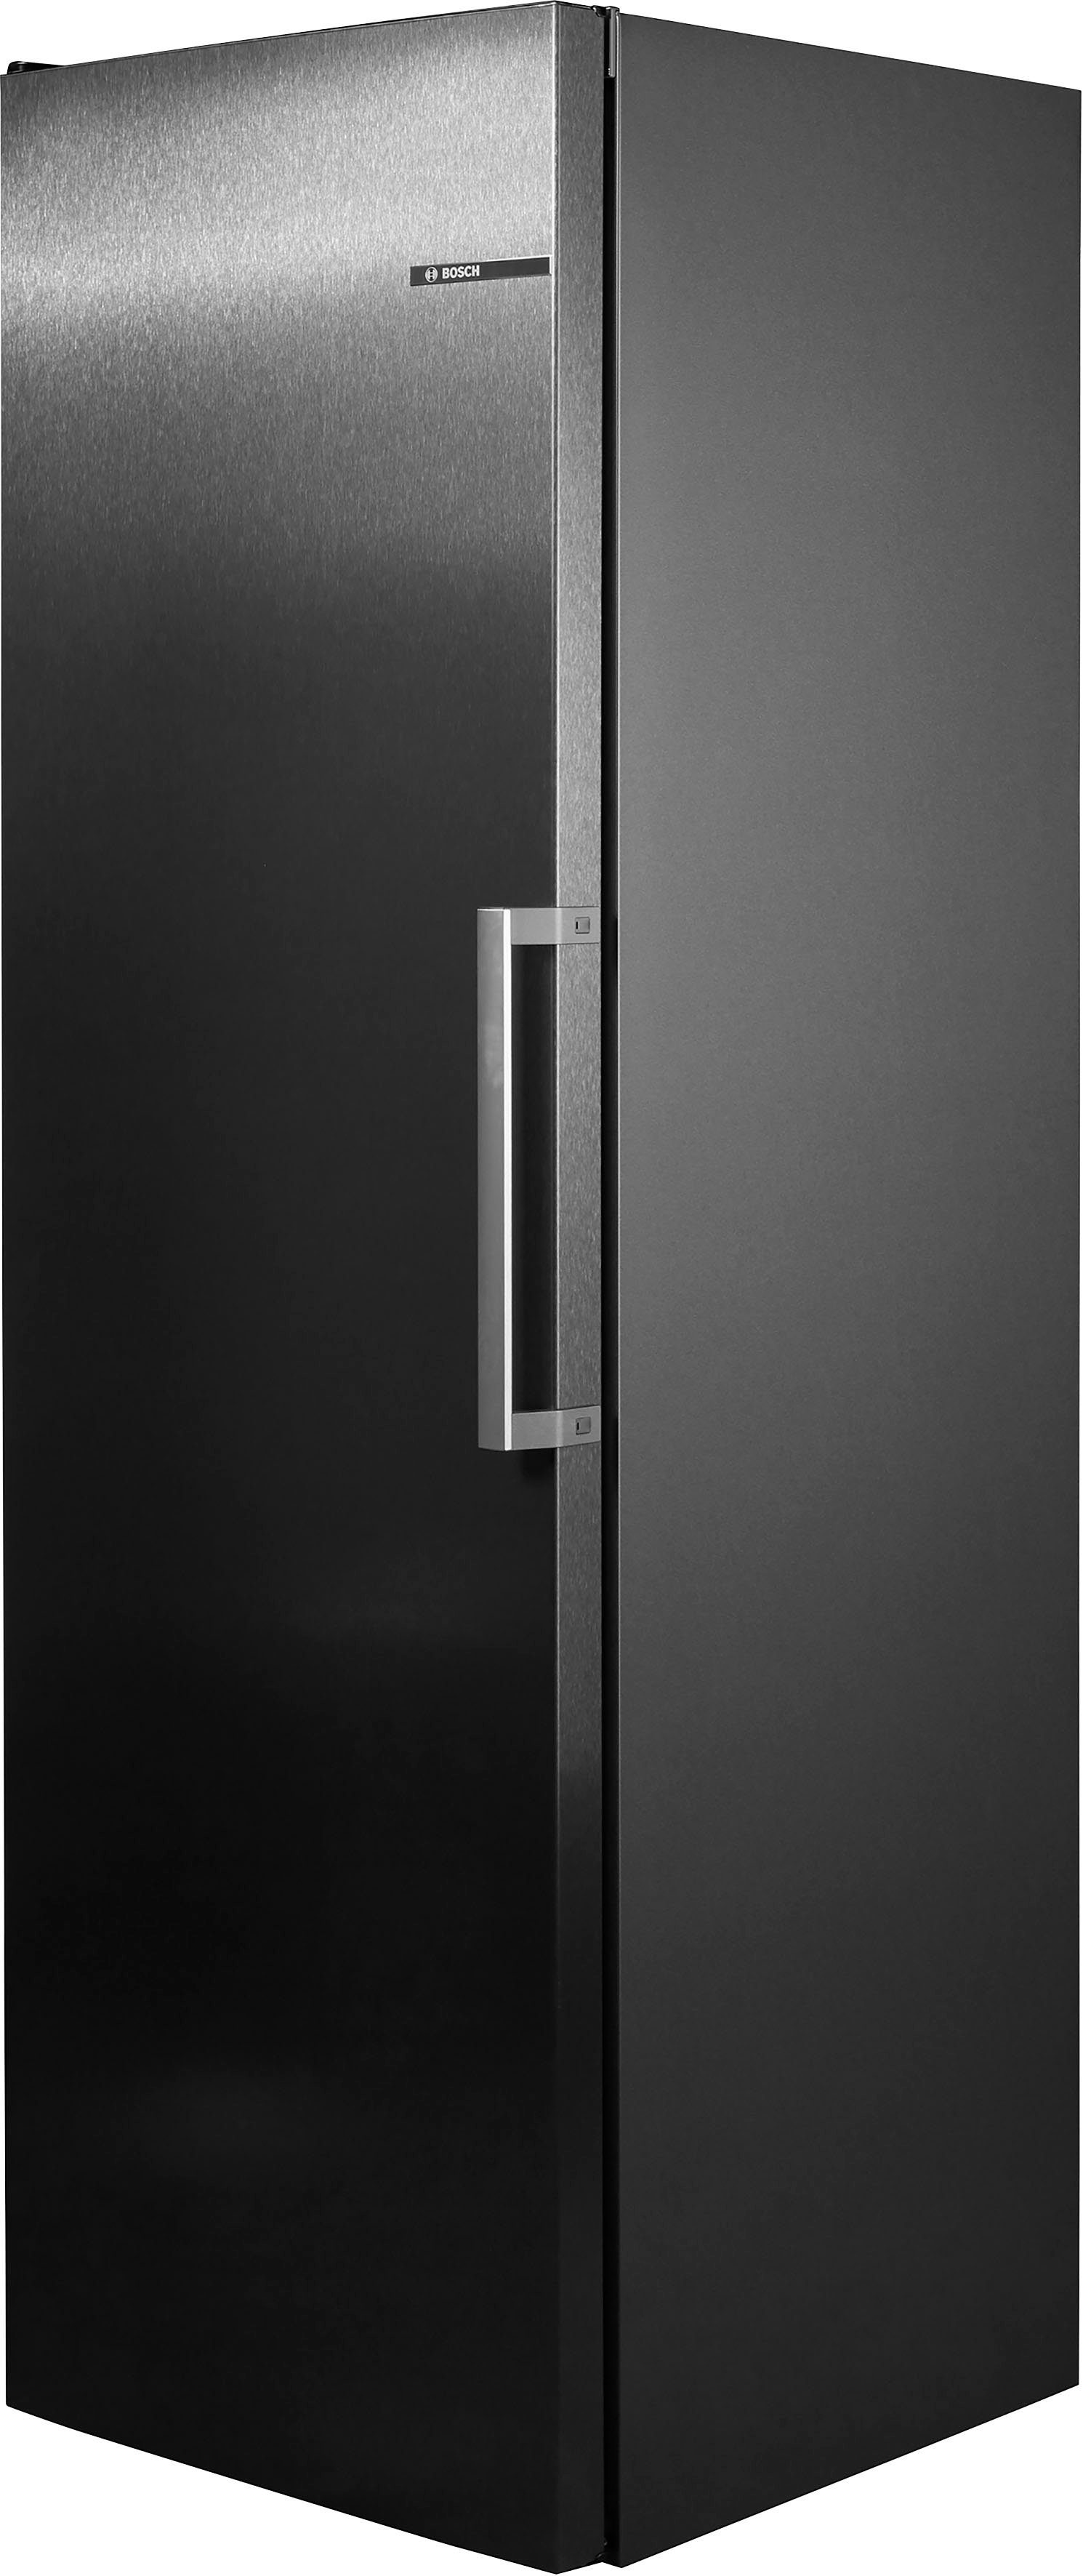 BOSCH Kühlschrank KSV36VXEP, 186 hoch, breit cm cm 60